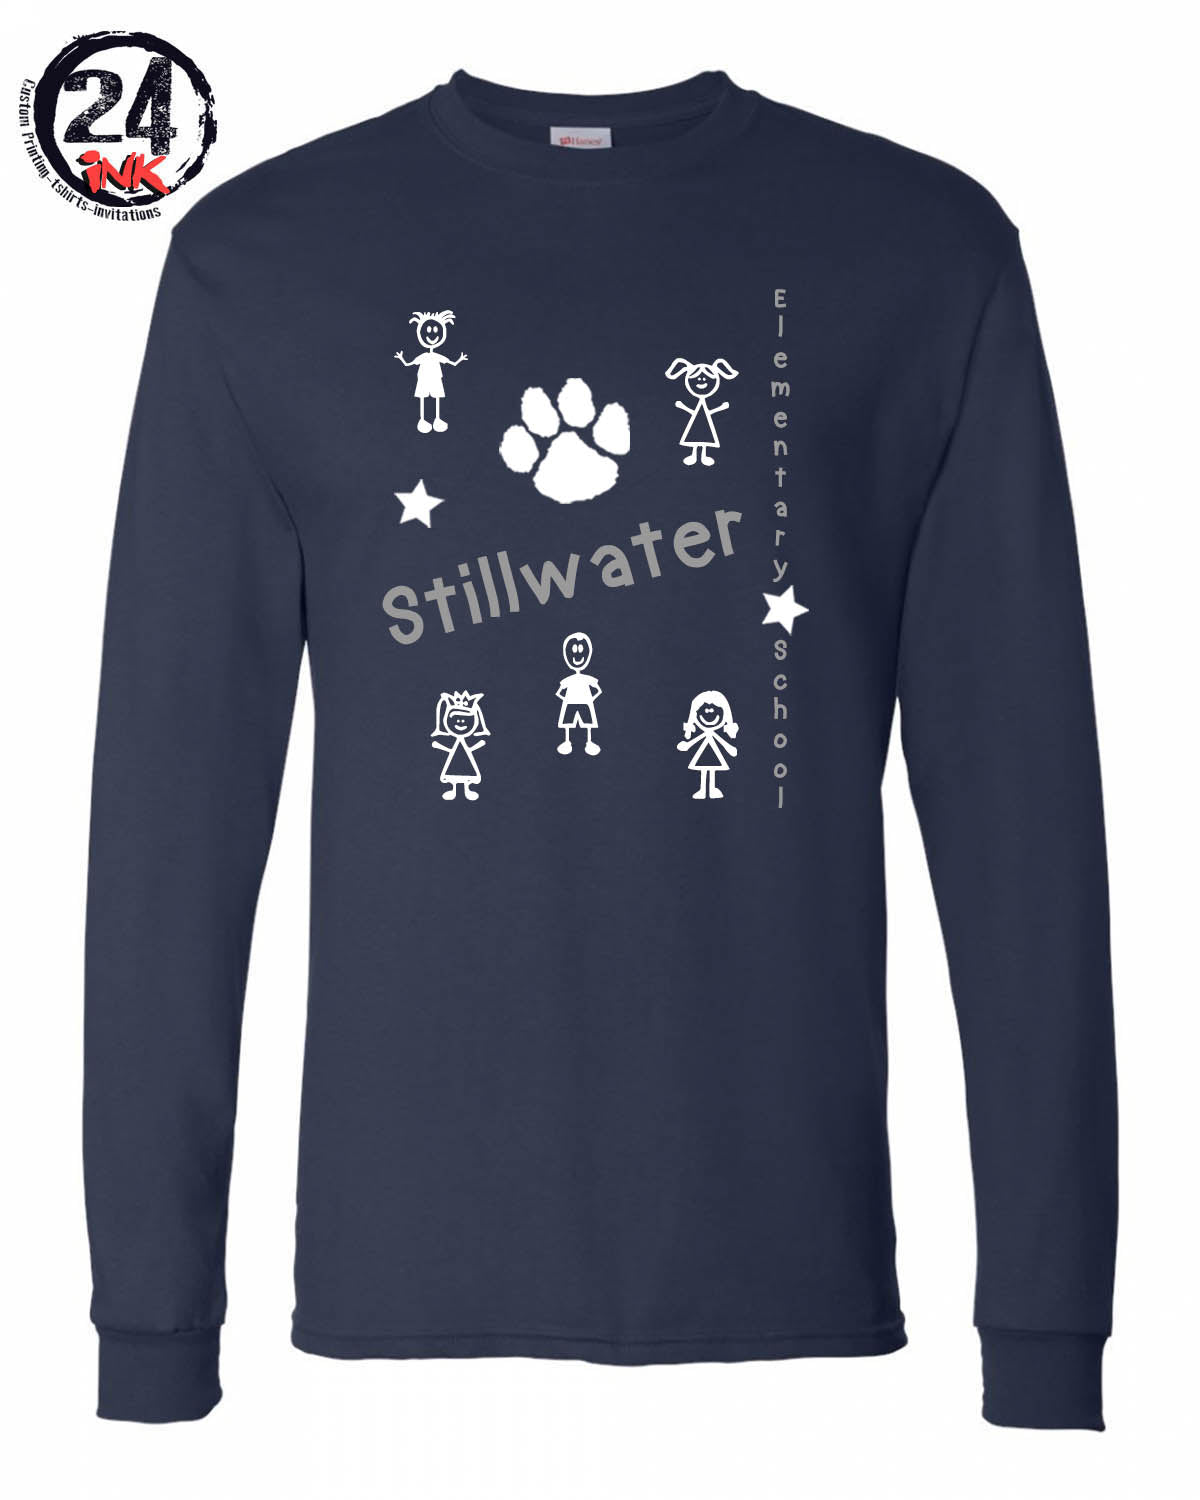 Stillwater People Long Sleeve Shirt